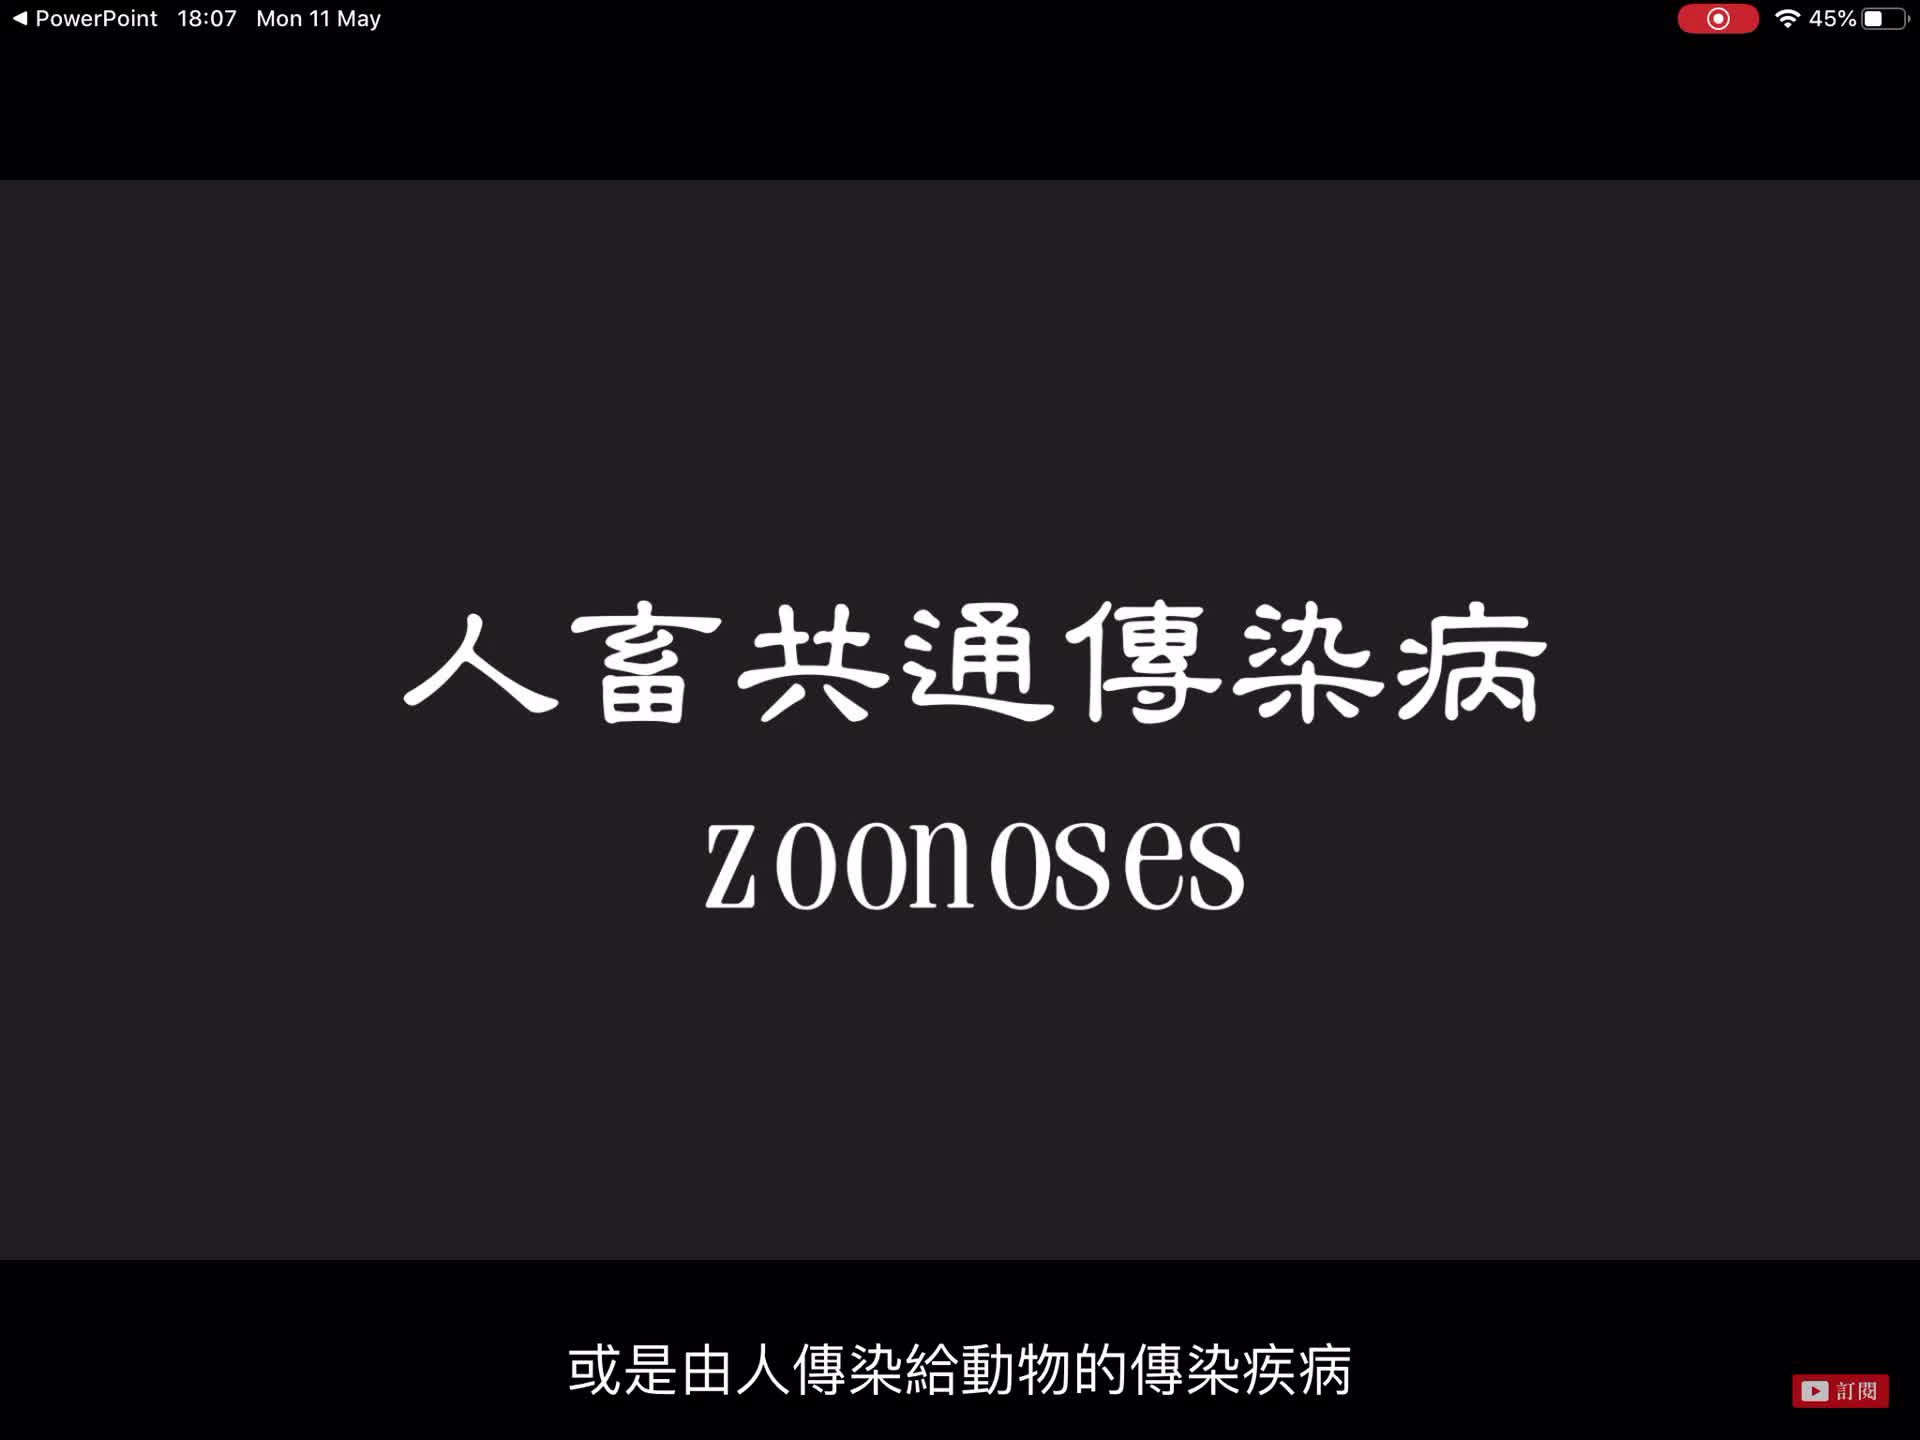 202005012 F2 IS Video class 30 (Part B)